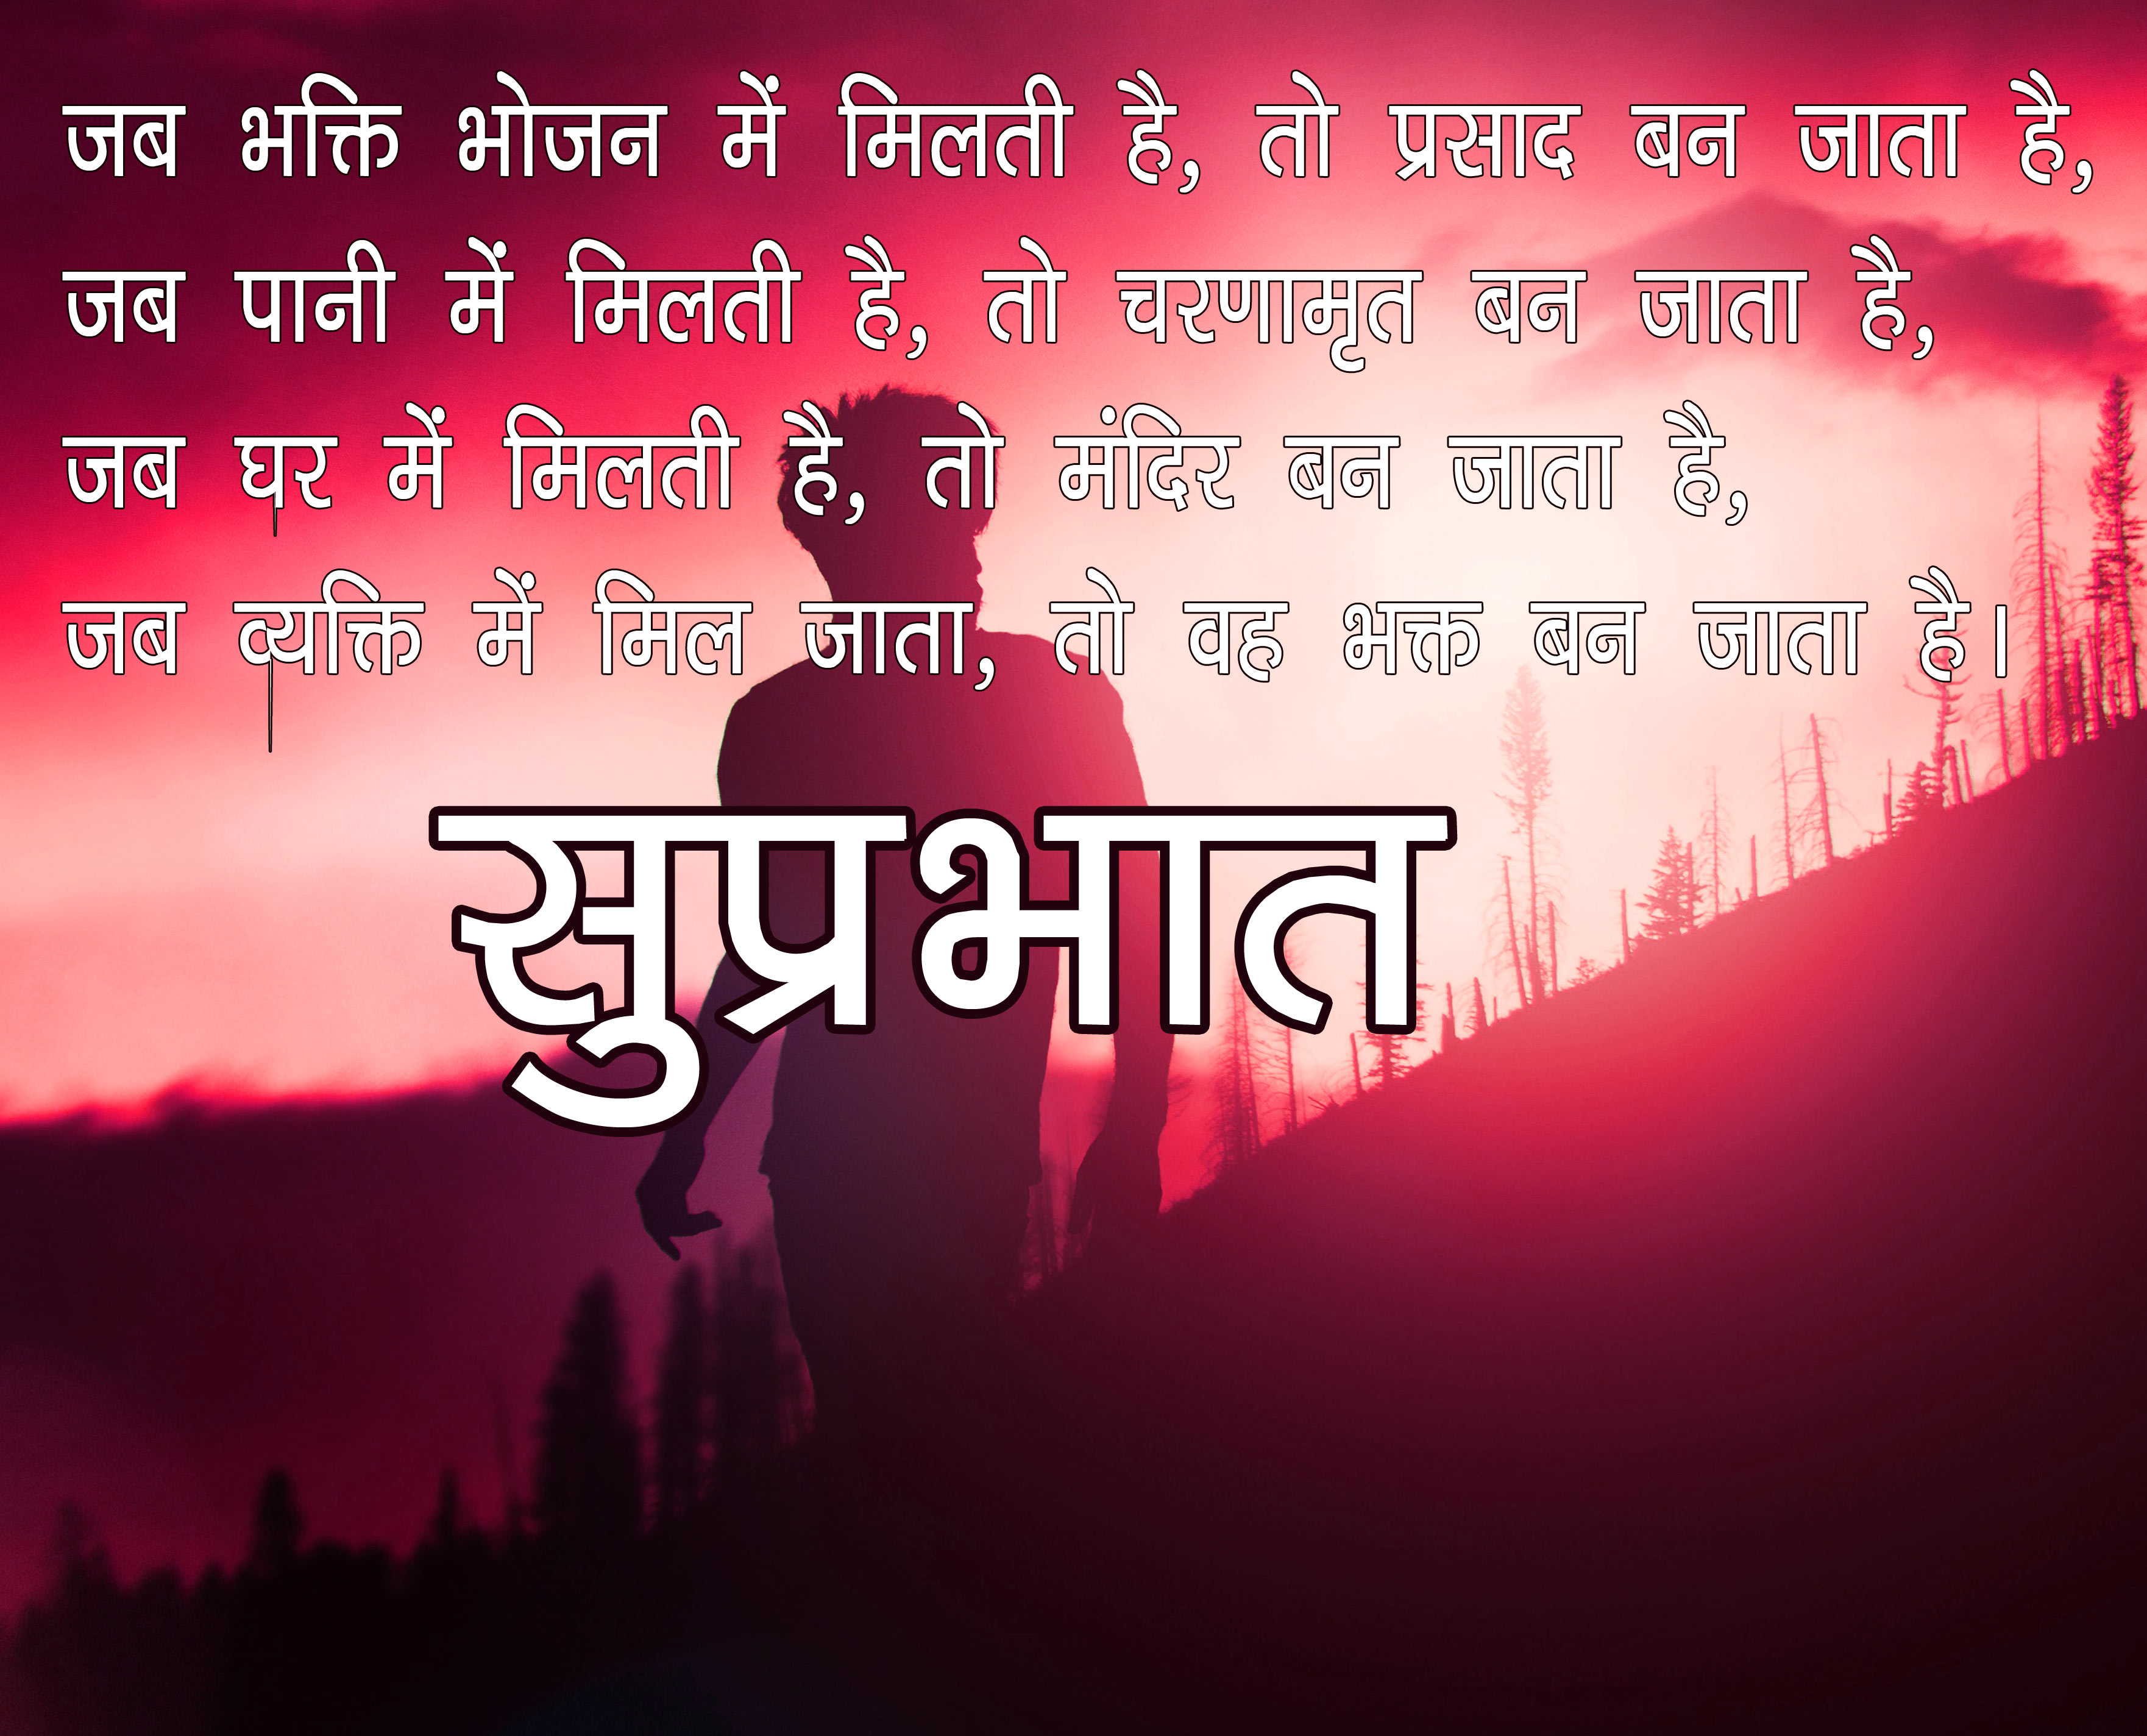 Good Morning Hindi Suvichar Images Pics Free for Facebook